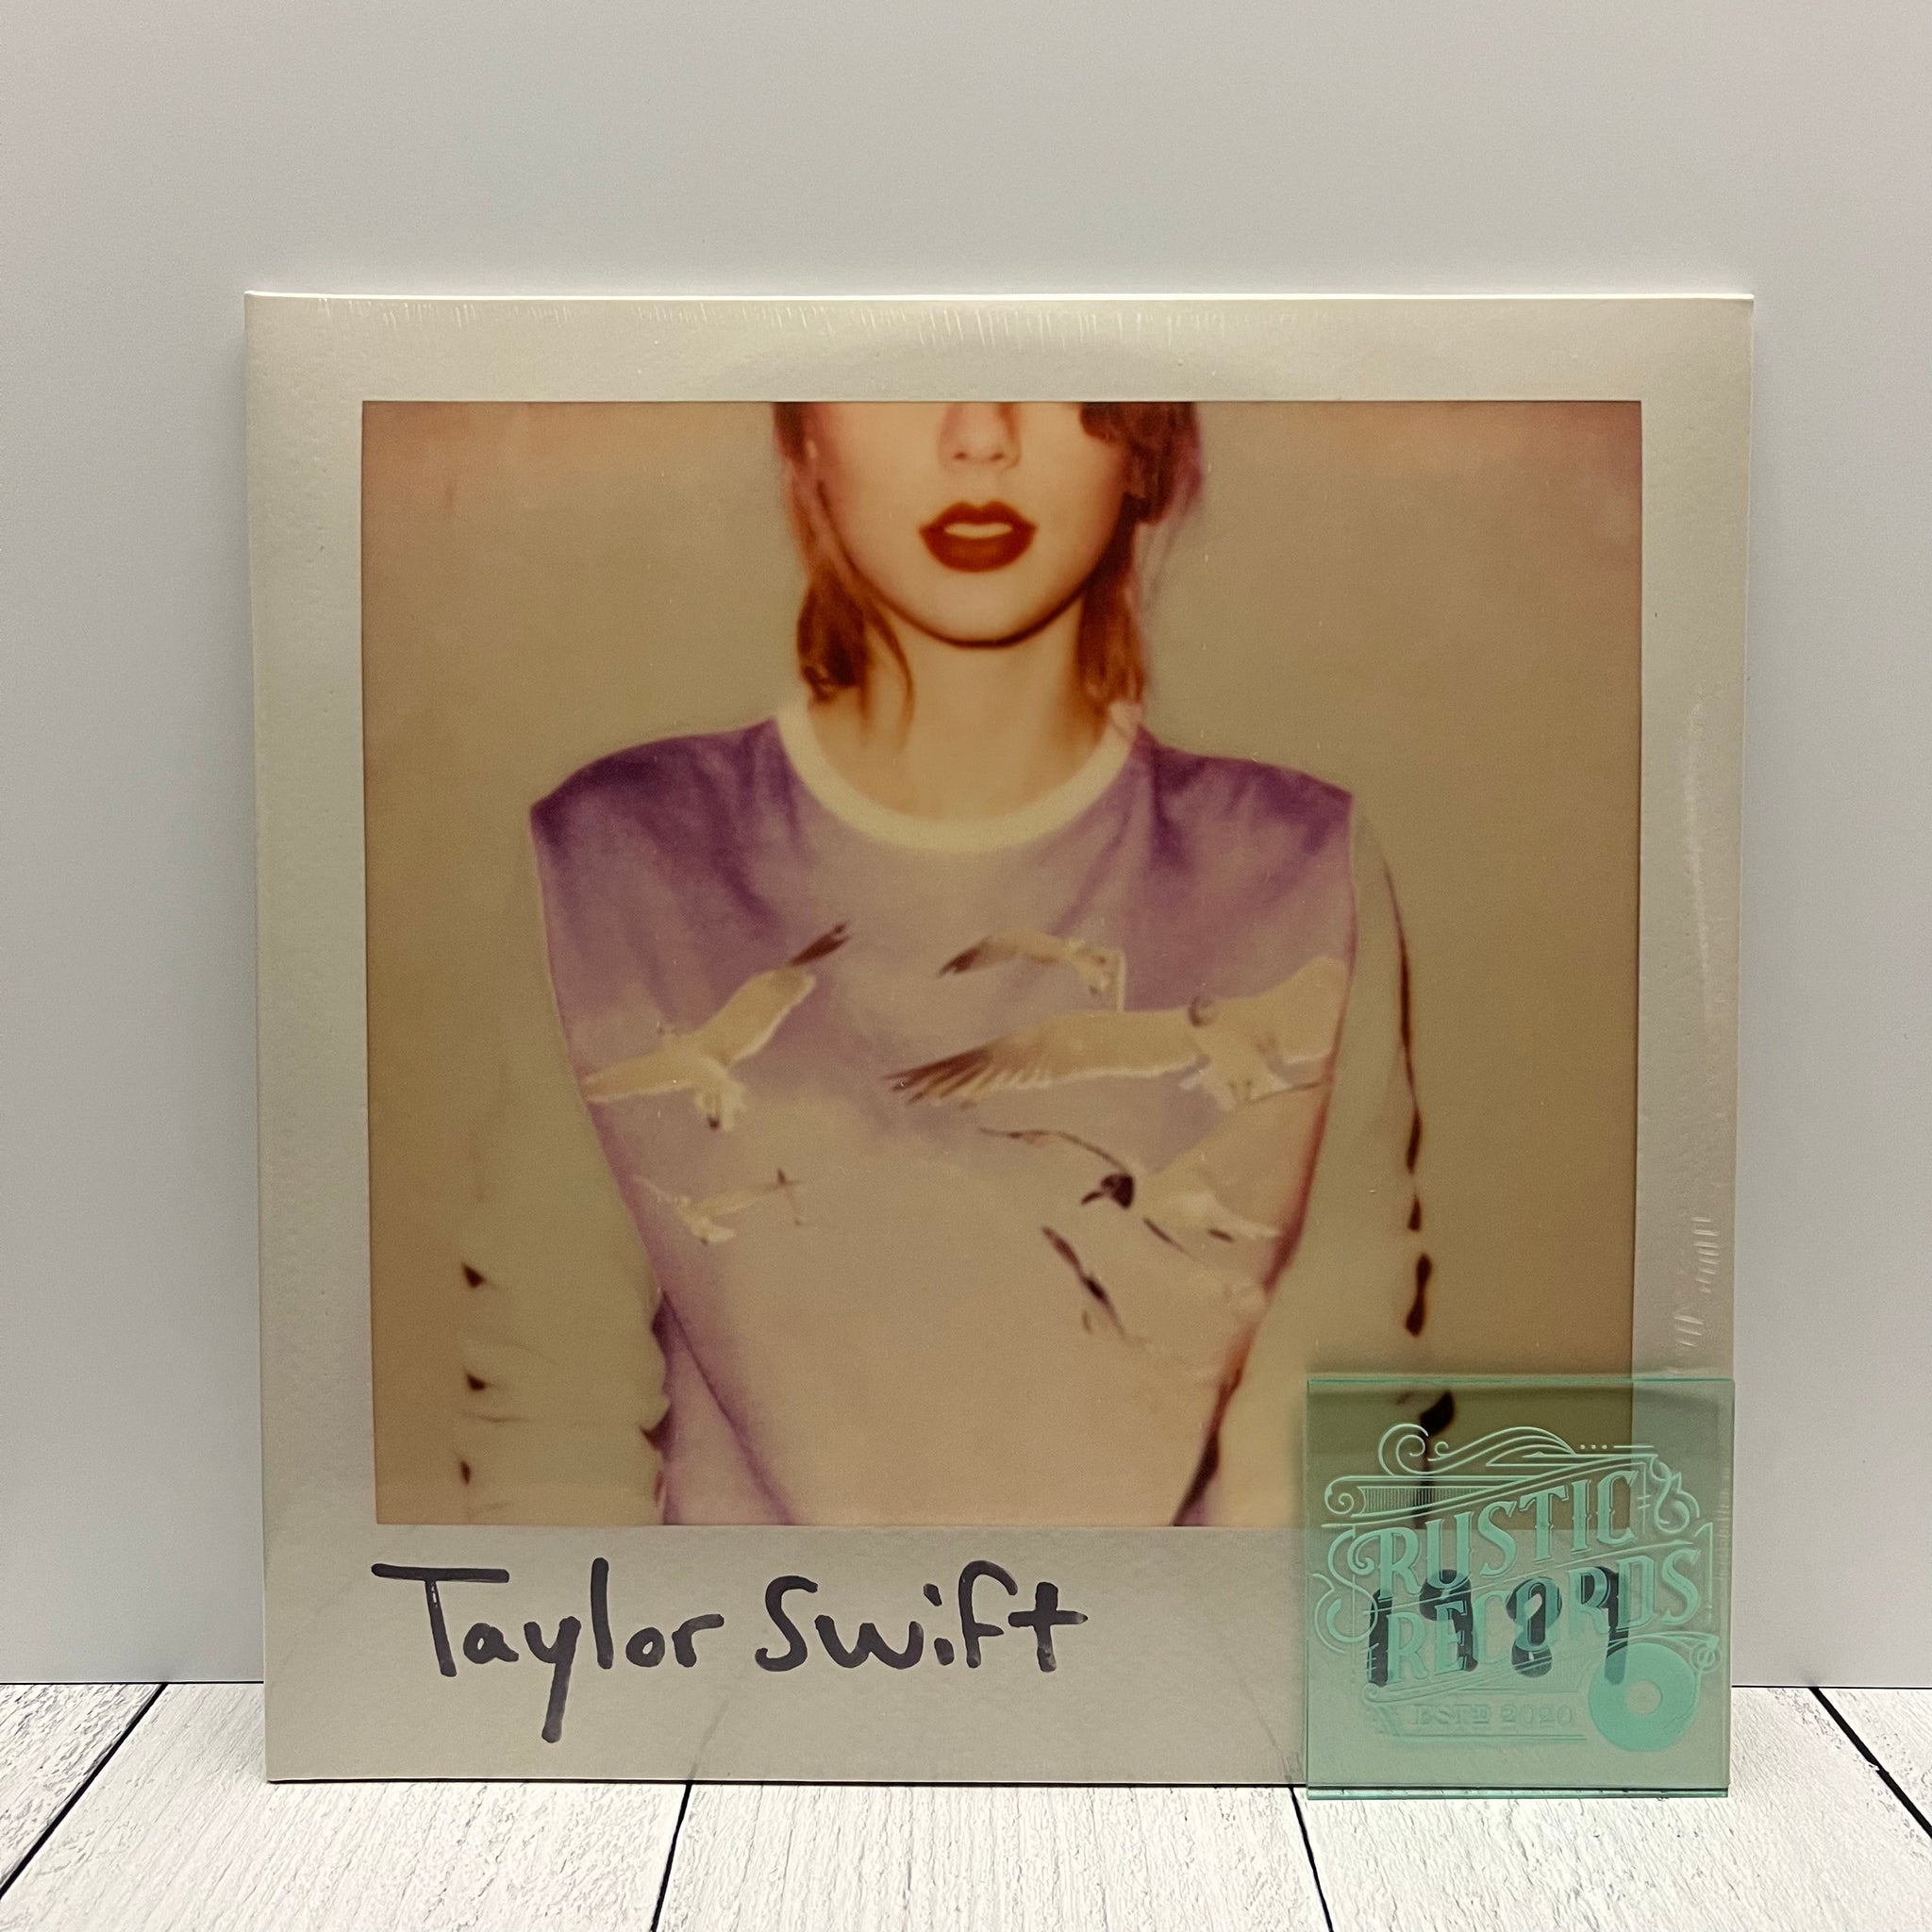 Taylor Swift - 1989 (EU pressing) (LIMIT 1 PER CUSTOMER)